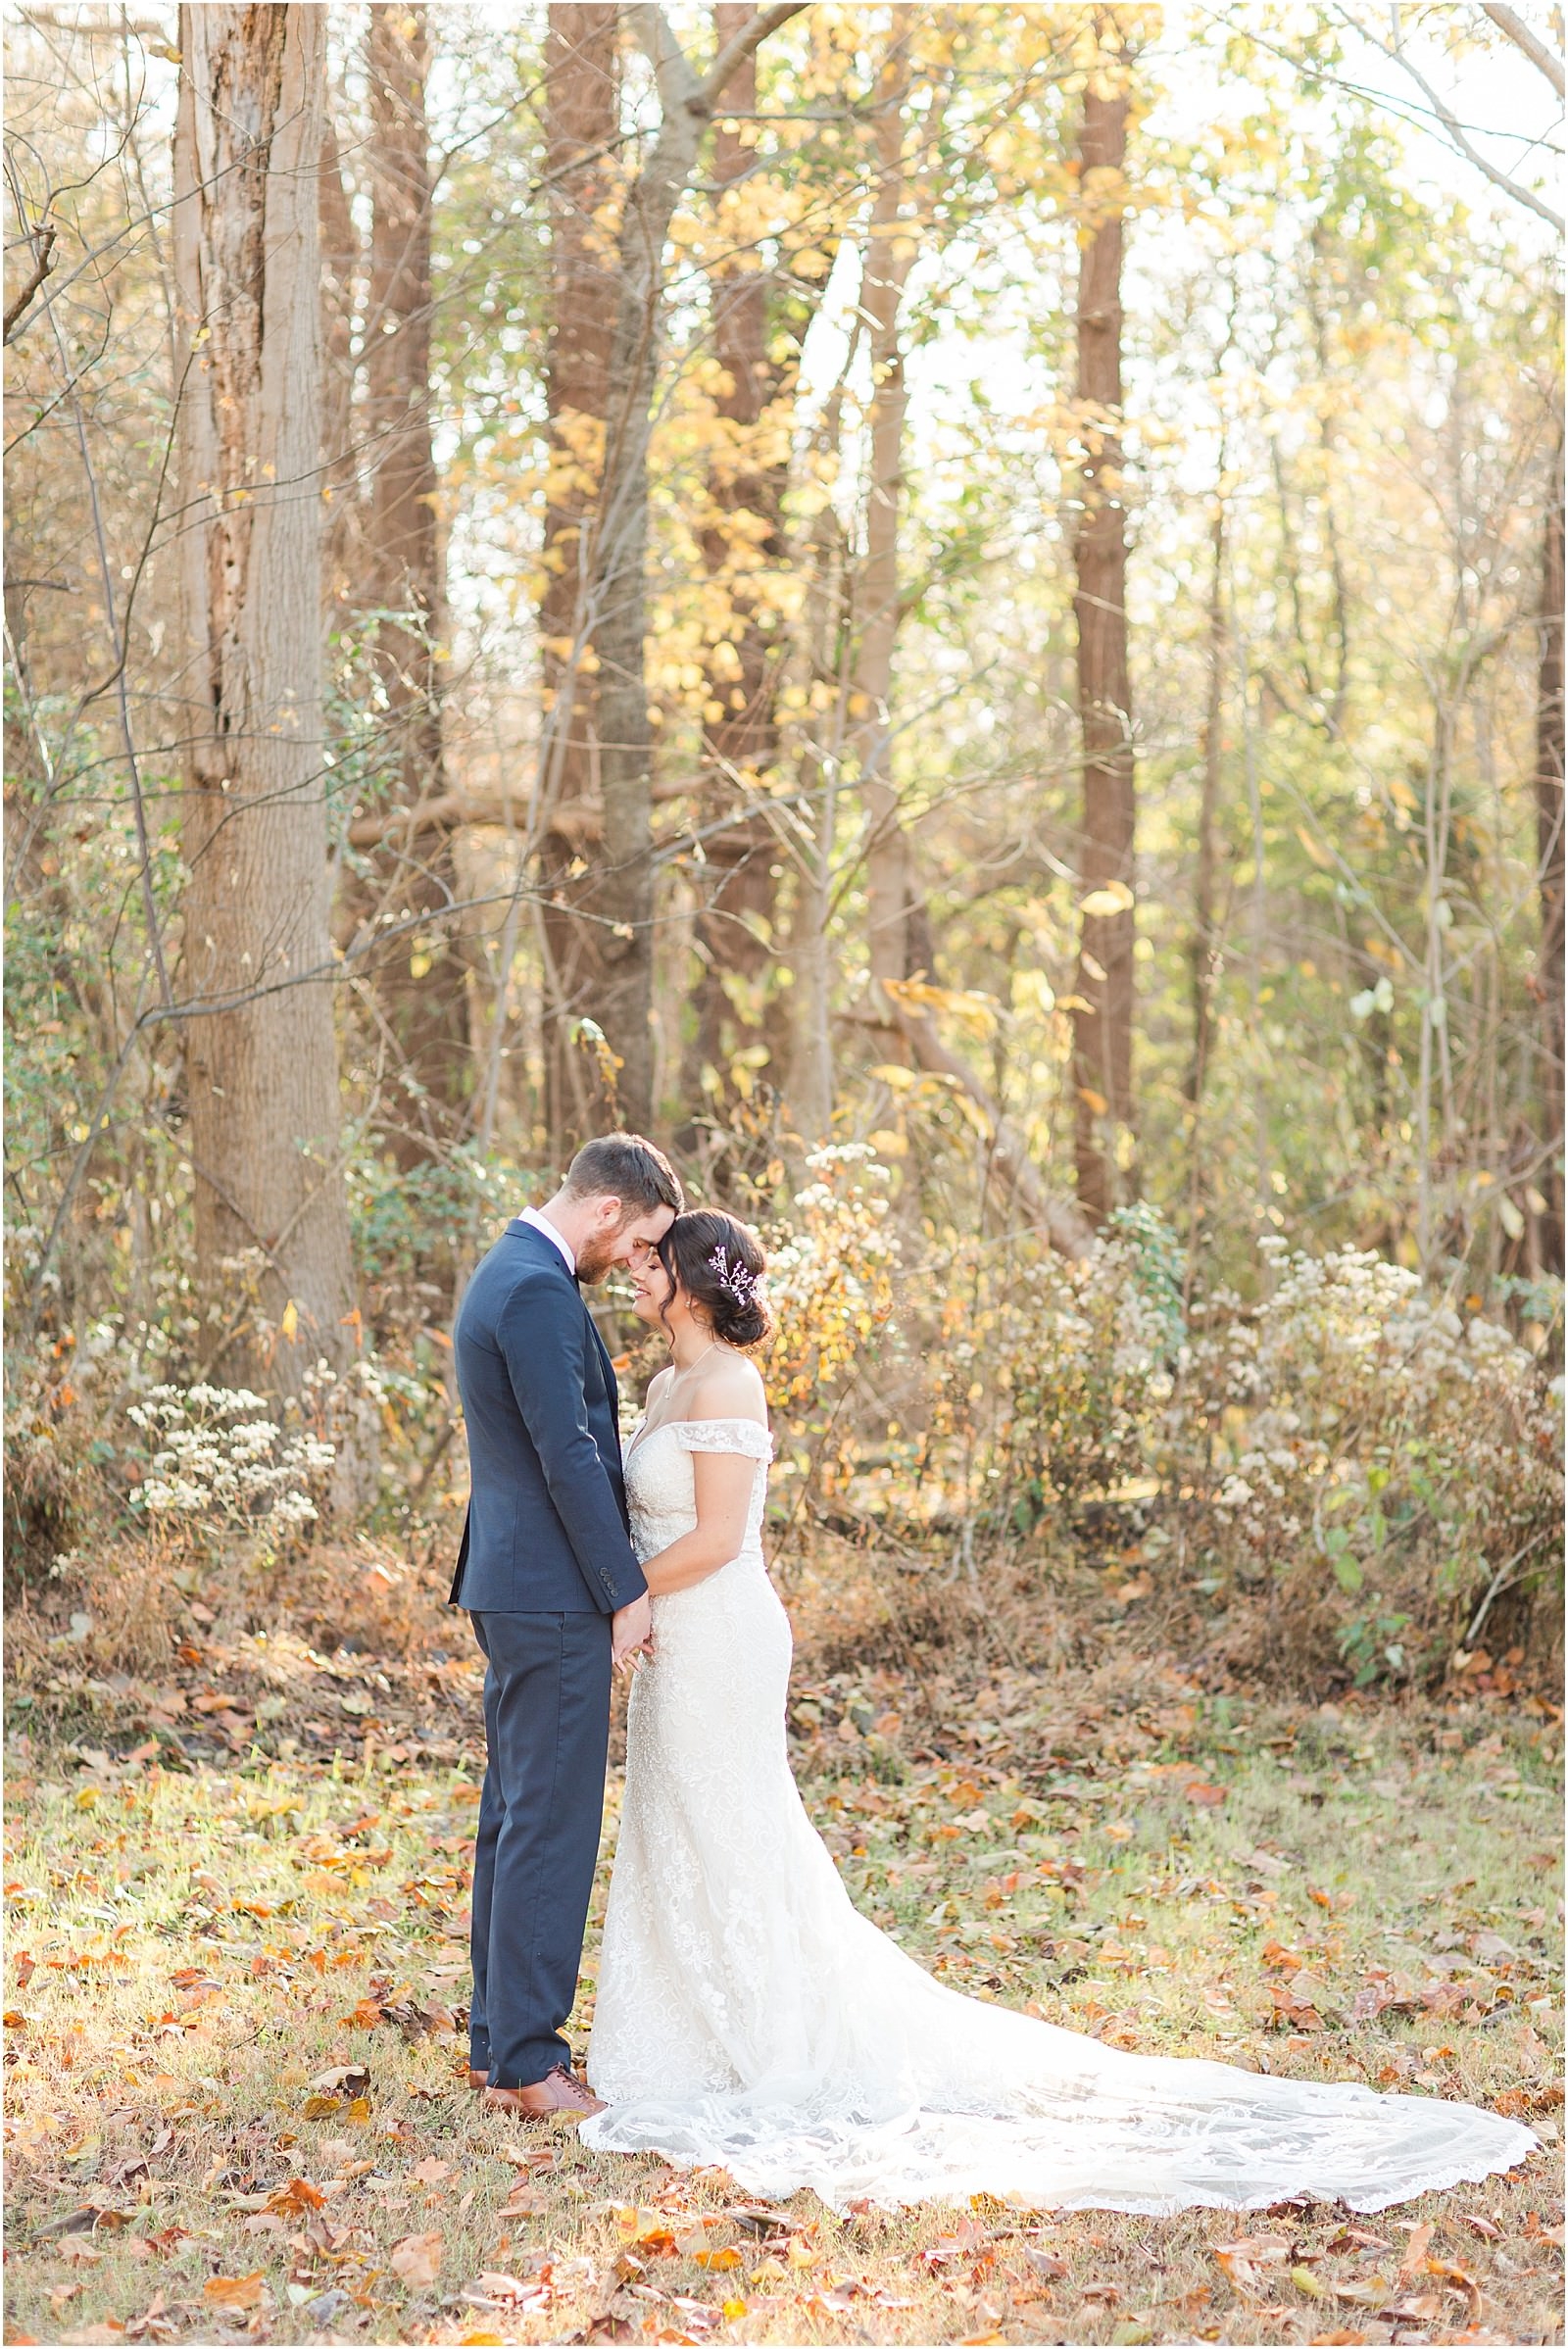 Walker and Alyssa's intimate fall wedding in Southern Indiana. | Wedding Photography | The Corner House Wedding | Southern Indiana Wedding | #fallwedding #intimatewedding | 032.jpg